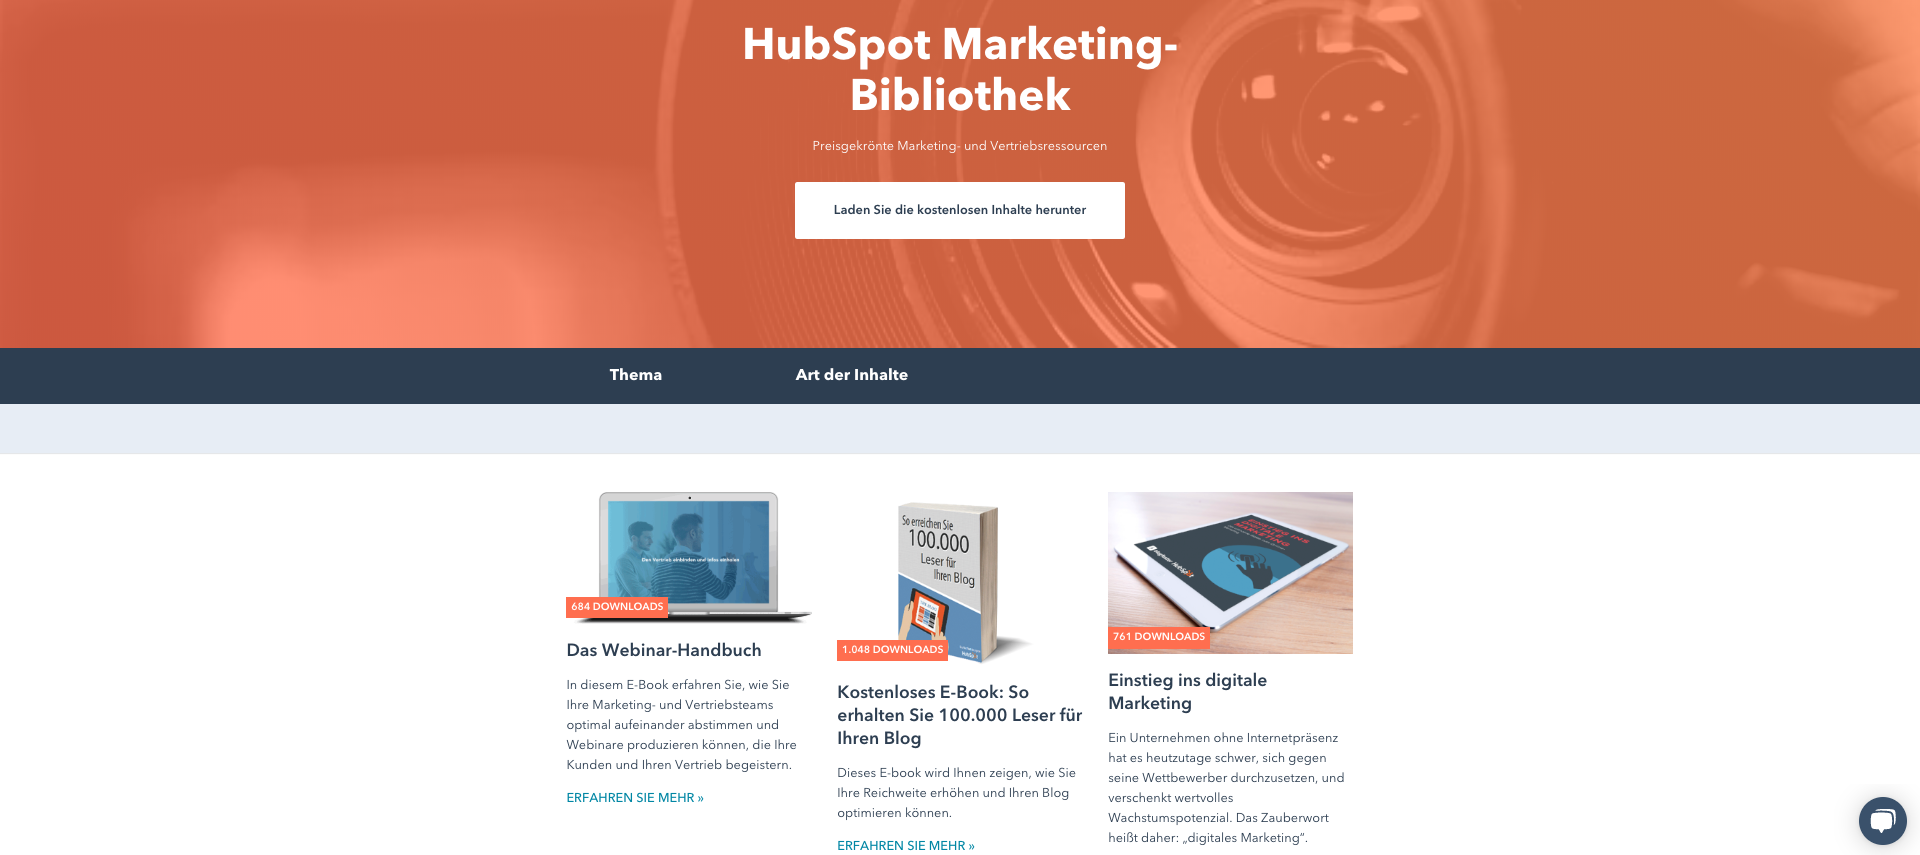 Hubspot - Blogpost, Listicle und dann? – 13 Digitale Content-Formate